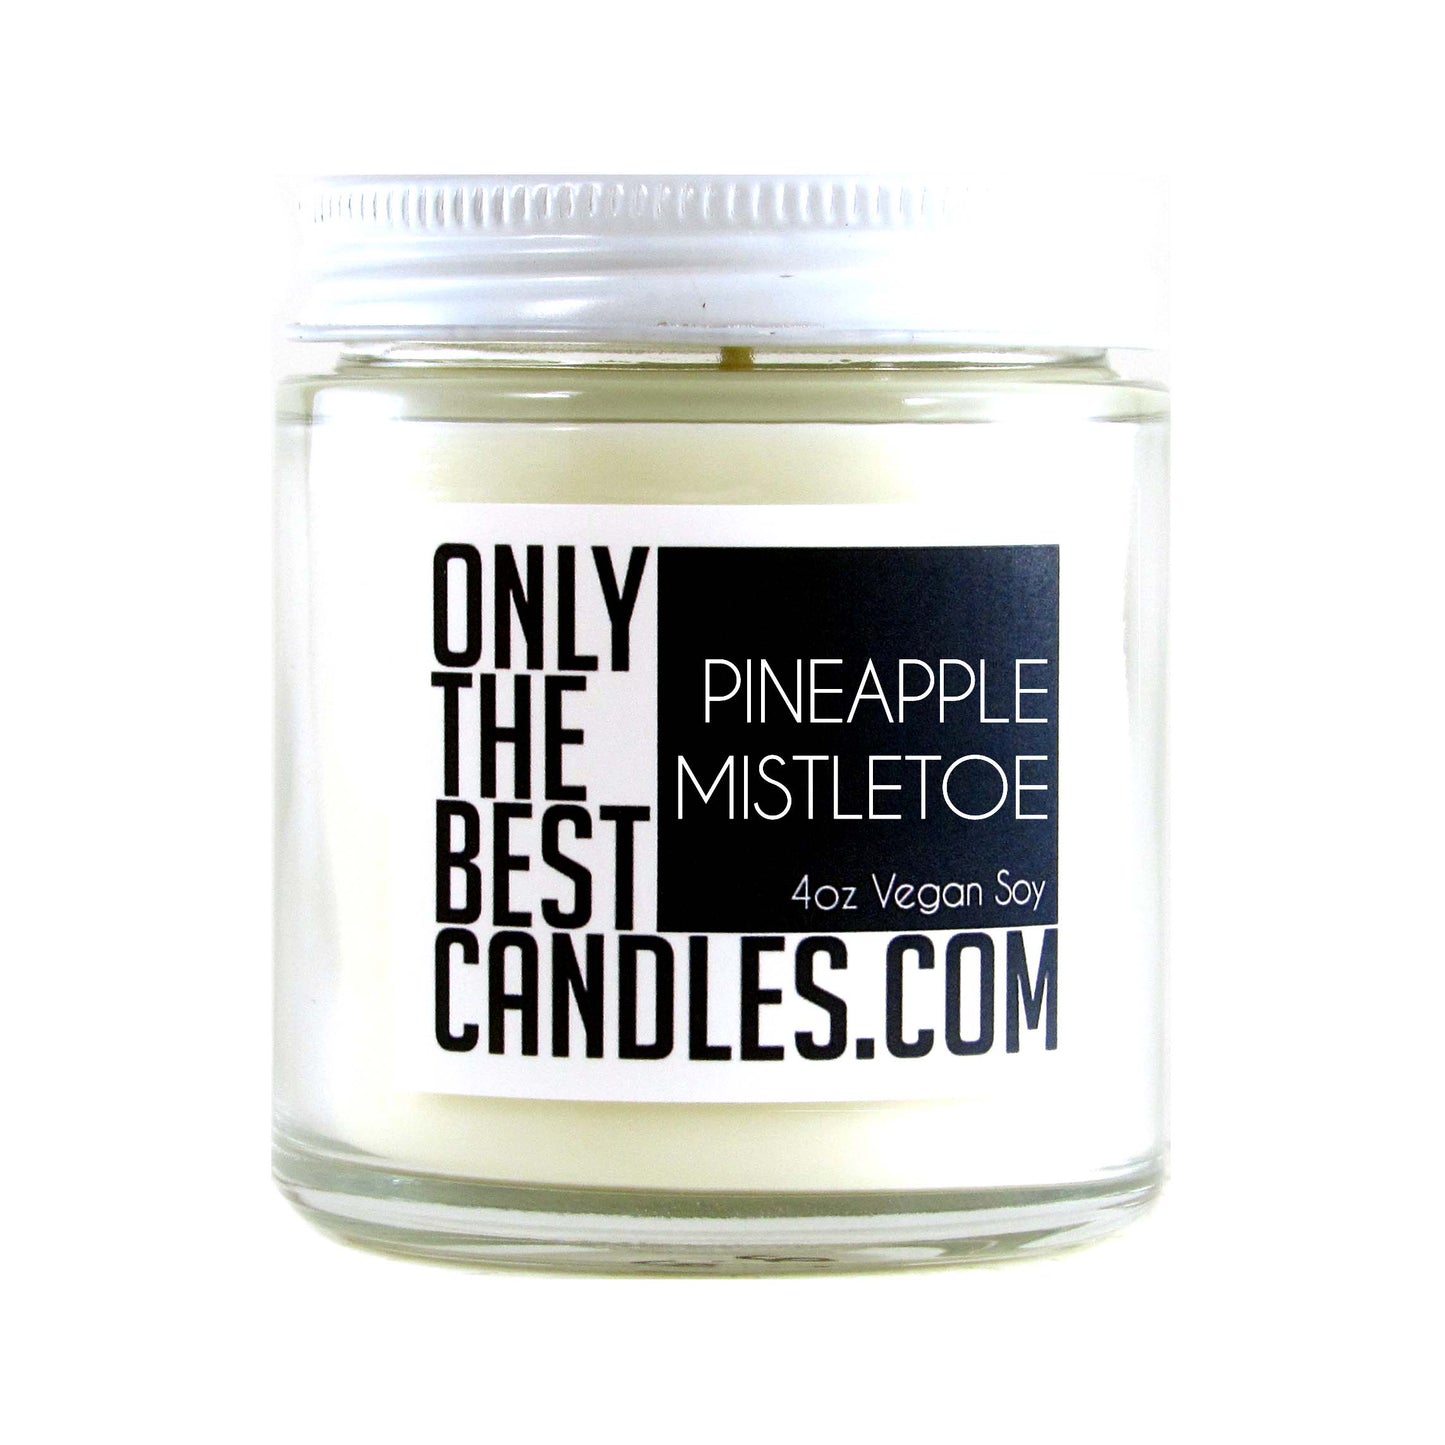 Pineapple Mistletoe 4oz Candle